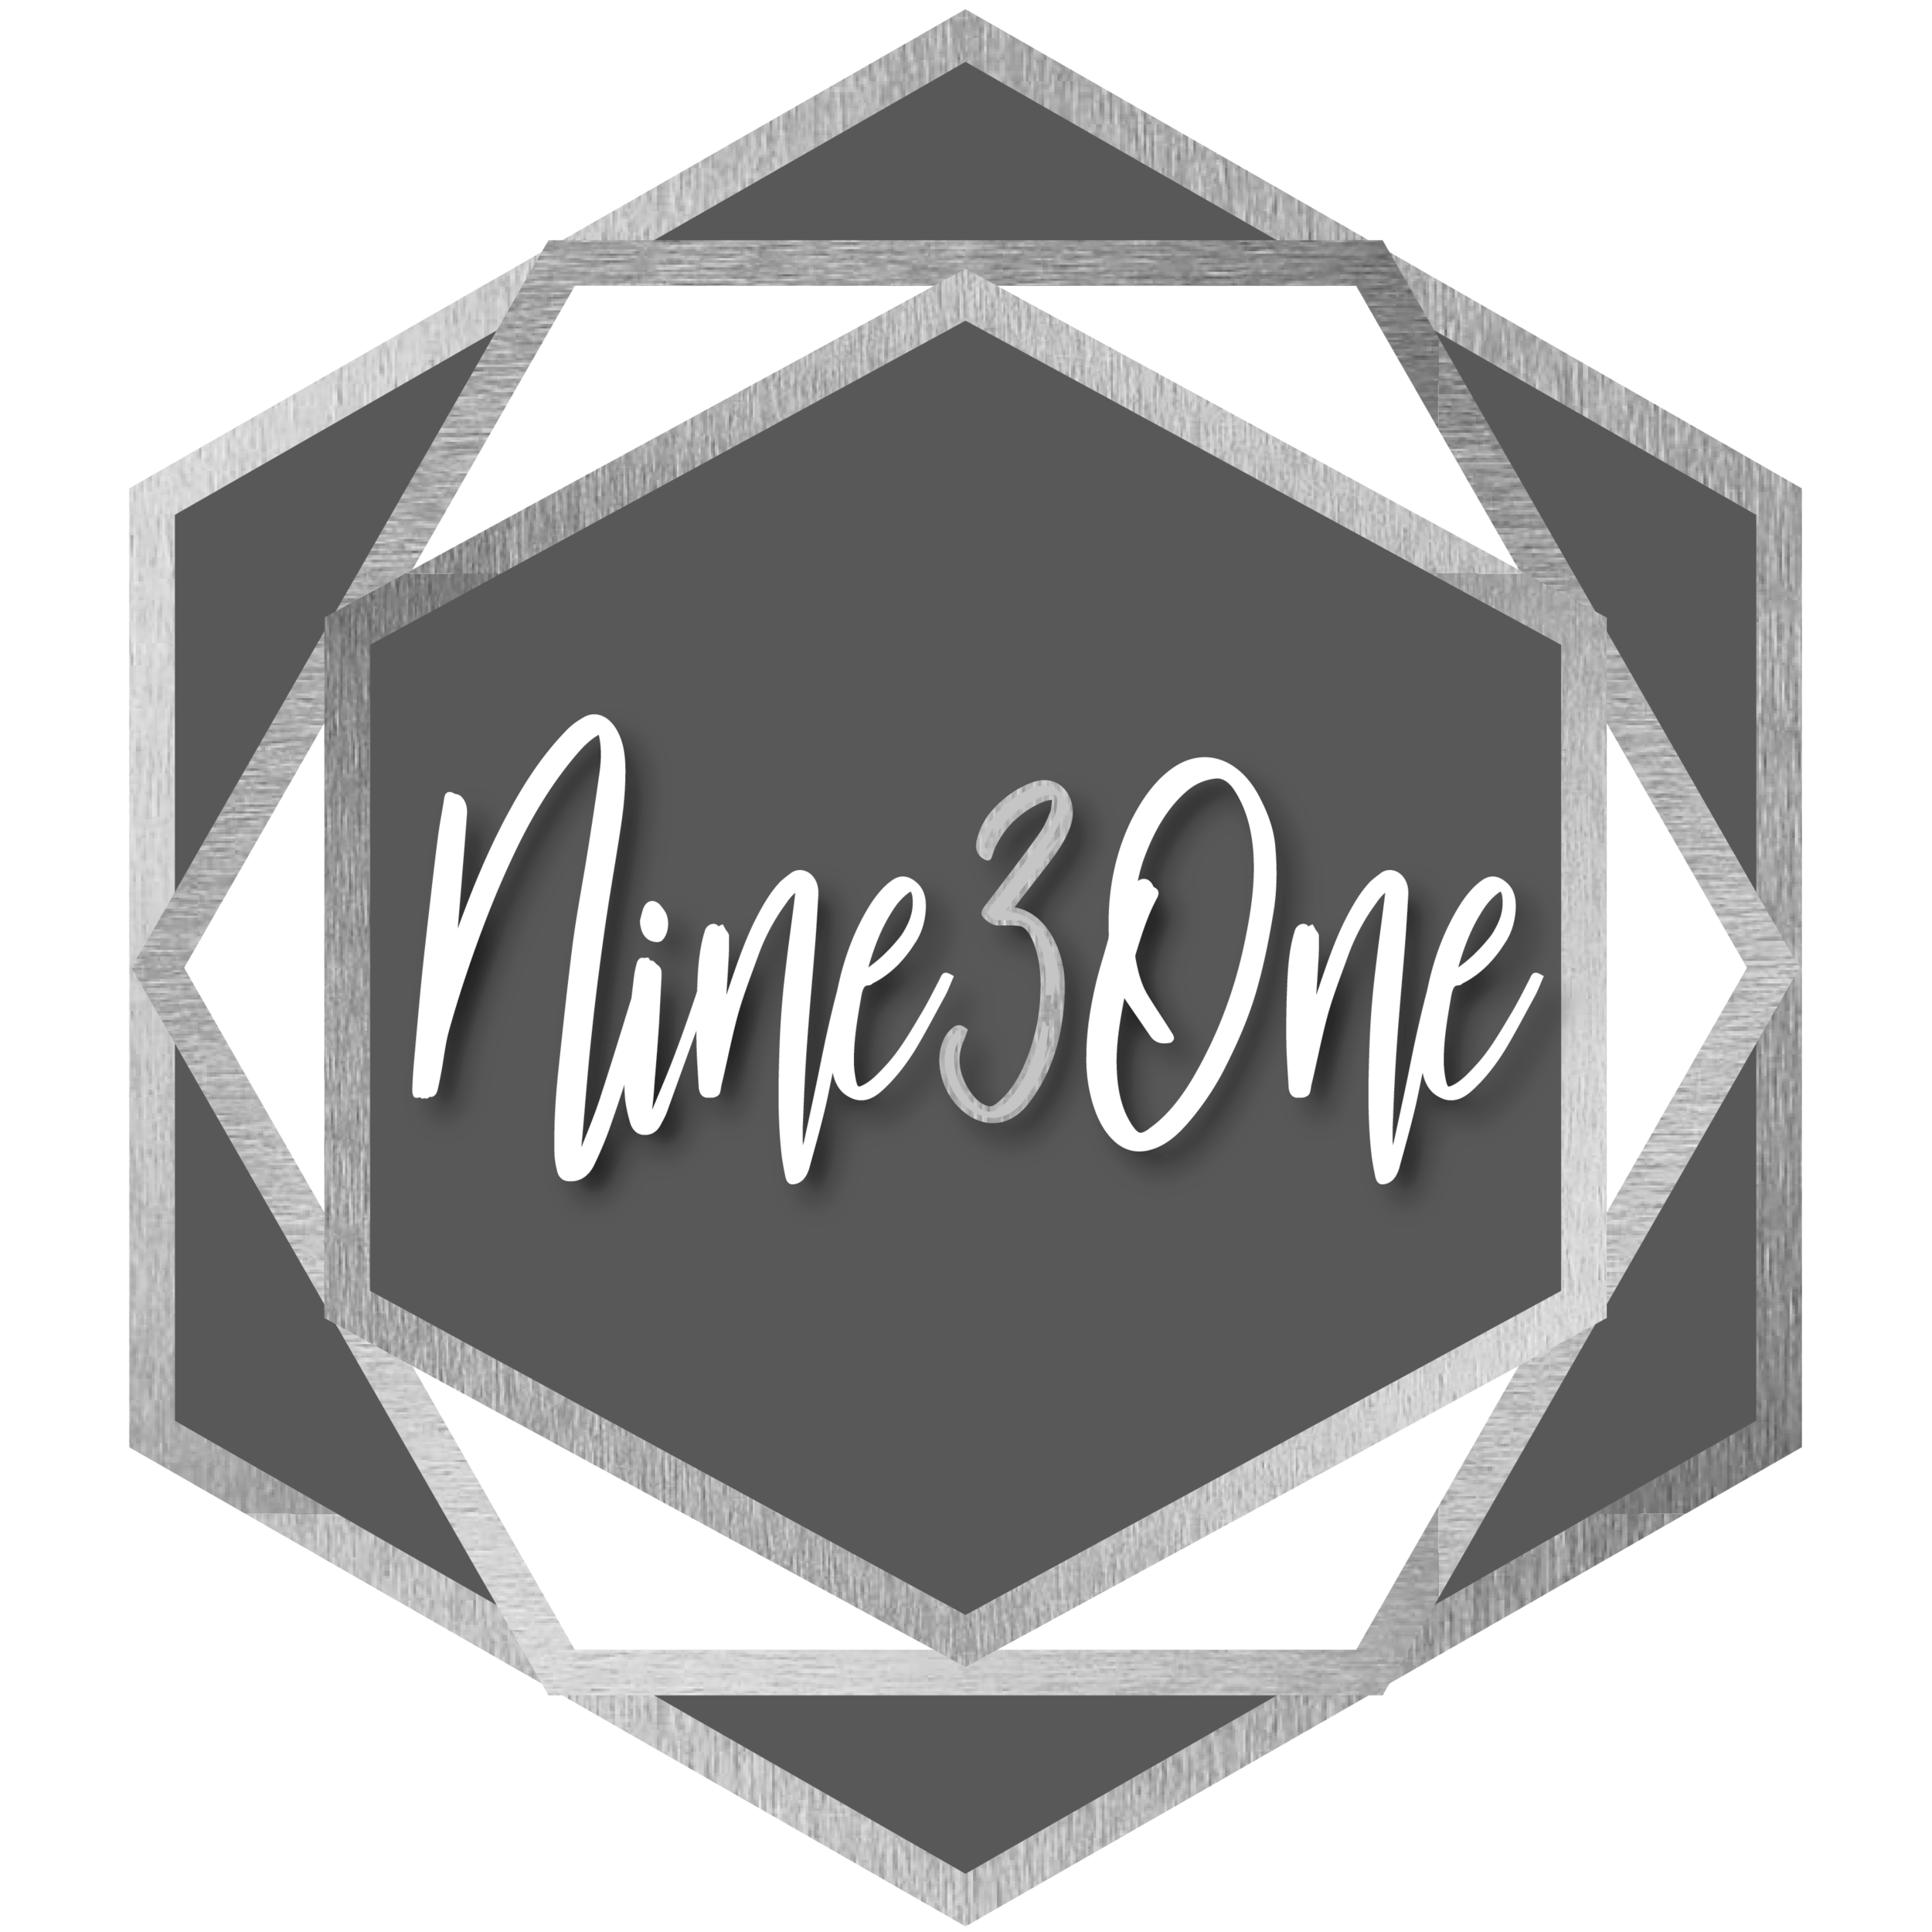 Nine3One logo.png